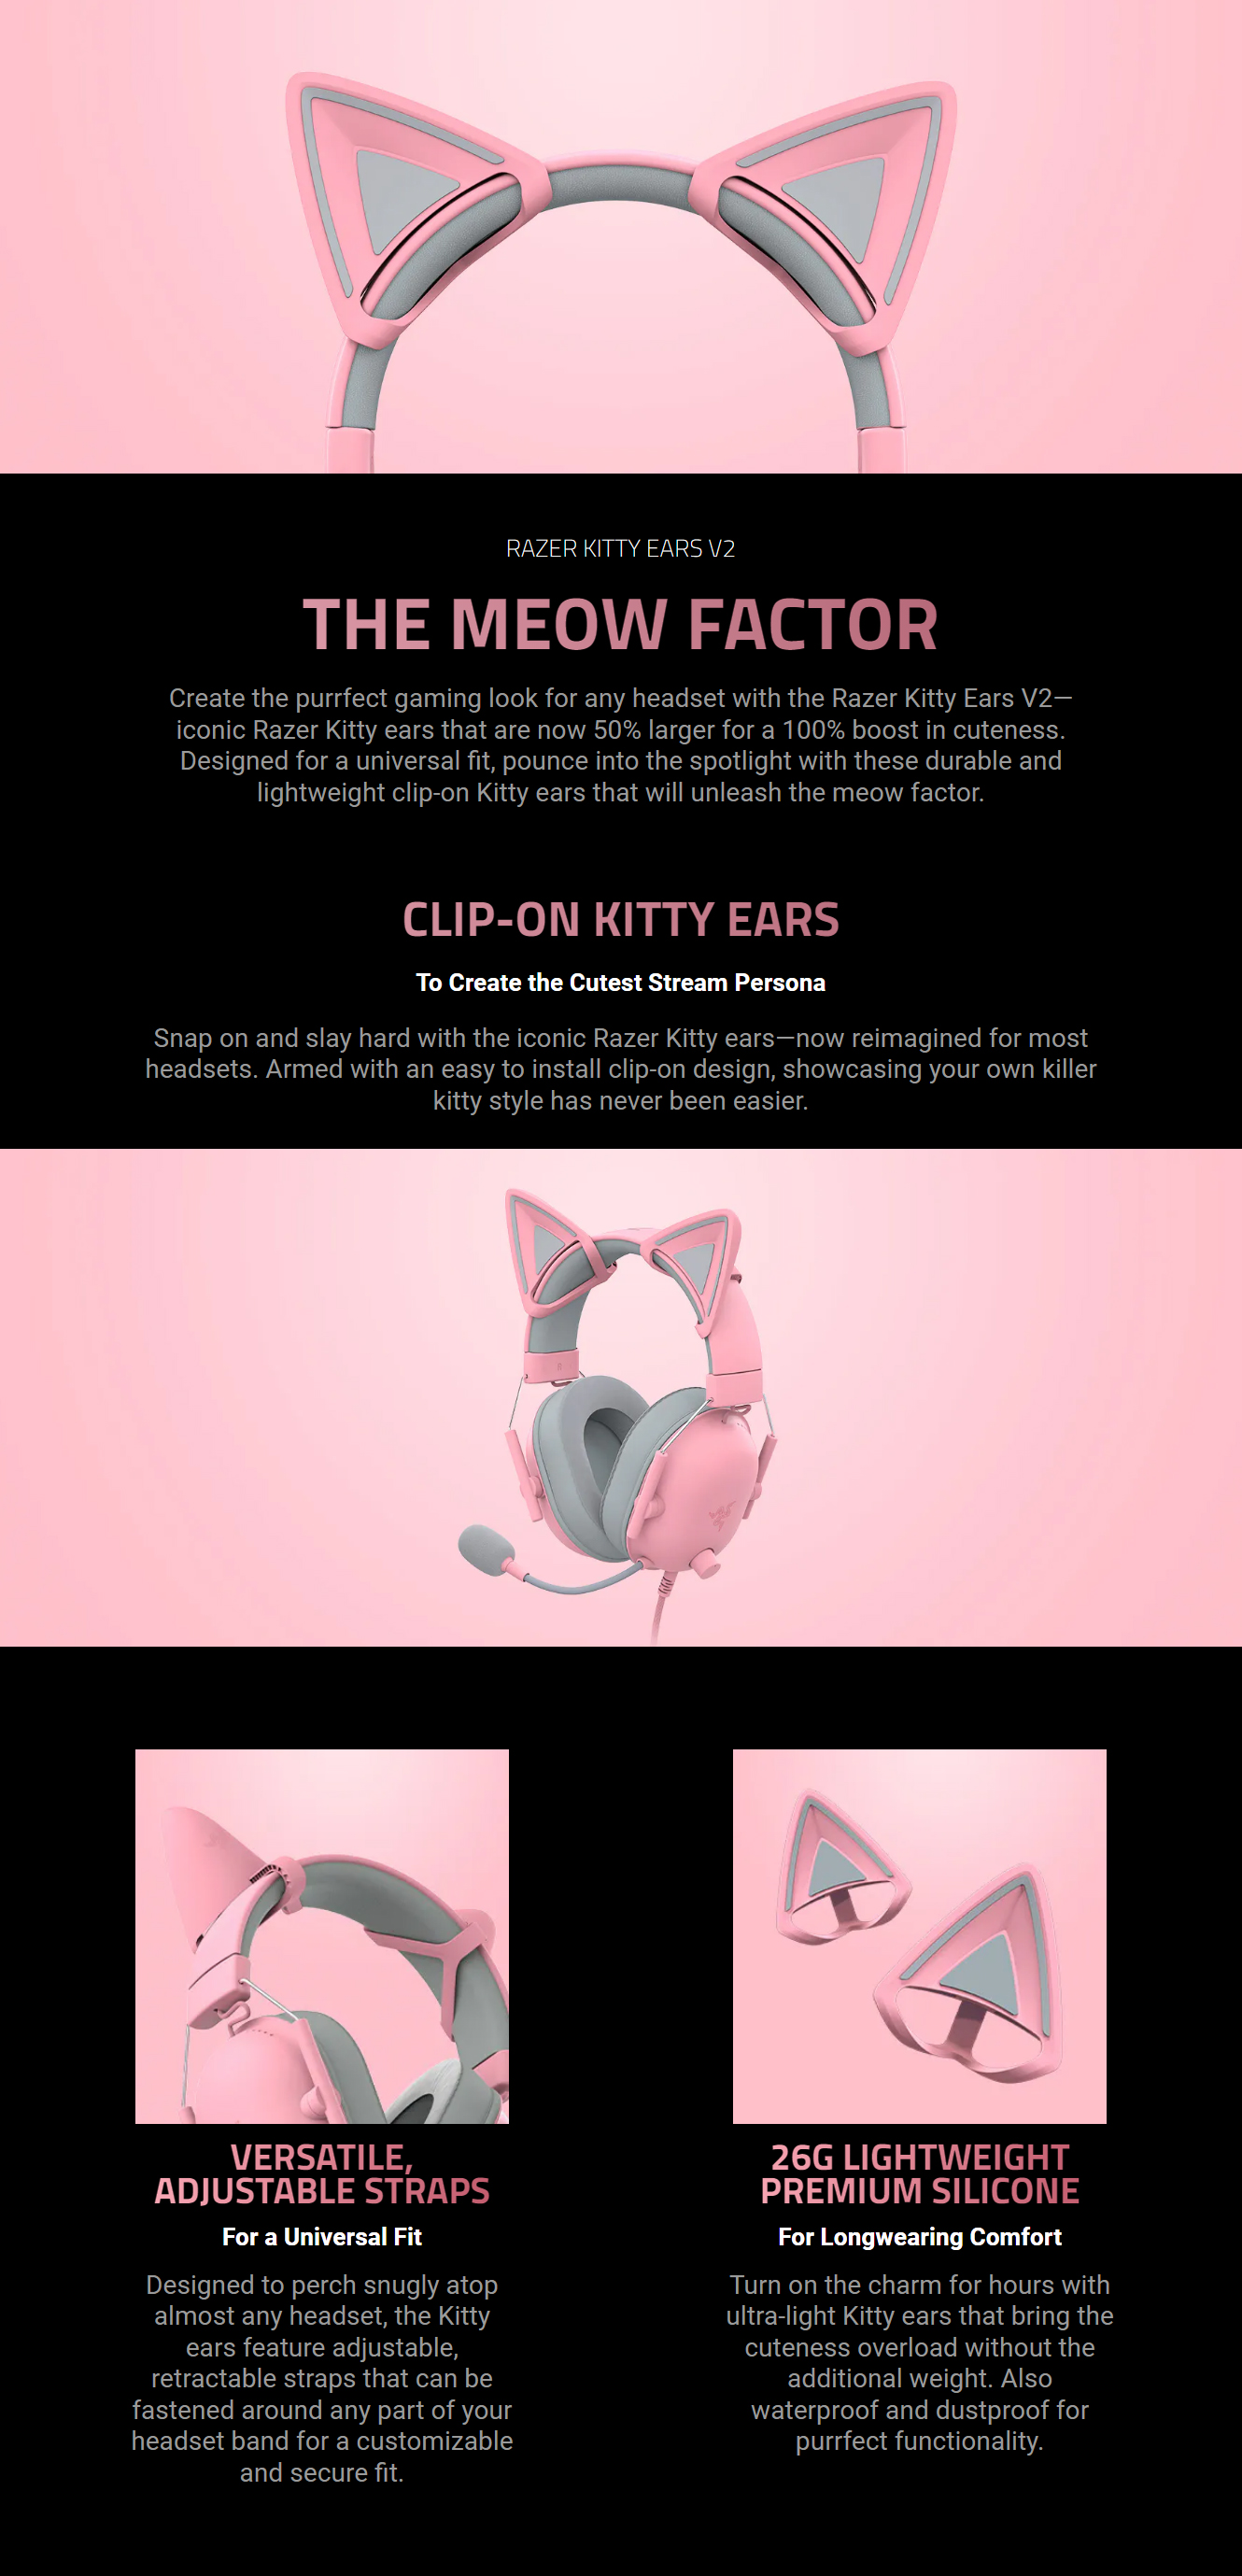 Headphones-Razer-Kitty-Ears-V2-Universal-Fit-Clip-on-Kitty-Ears-for-Headsets-Quartz-Edition-RC21-02230200-R3M1-1